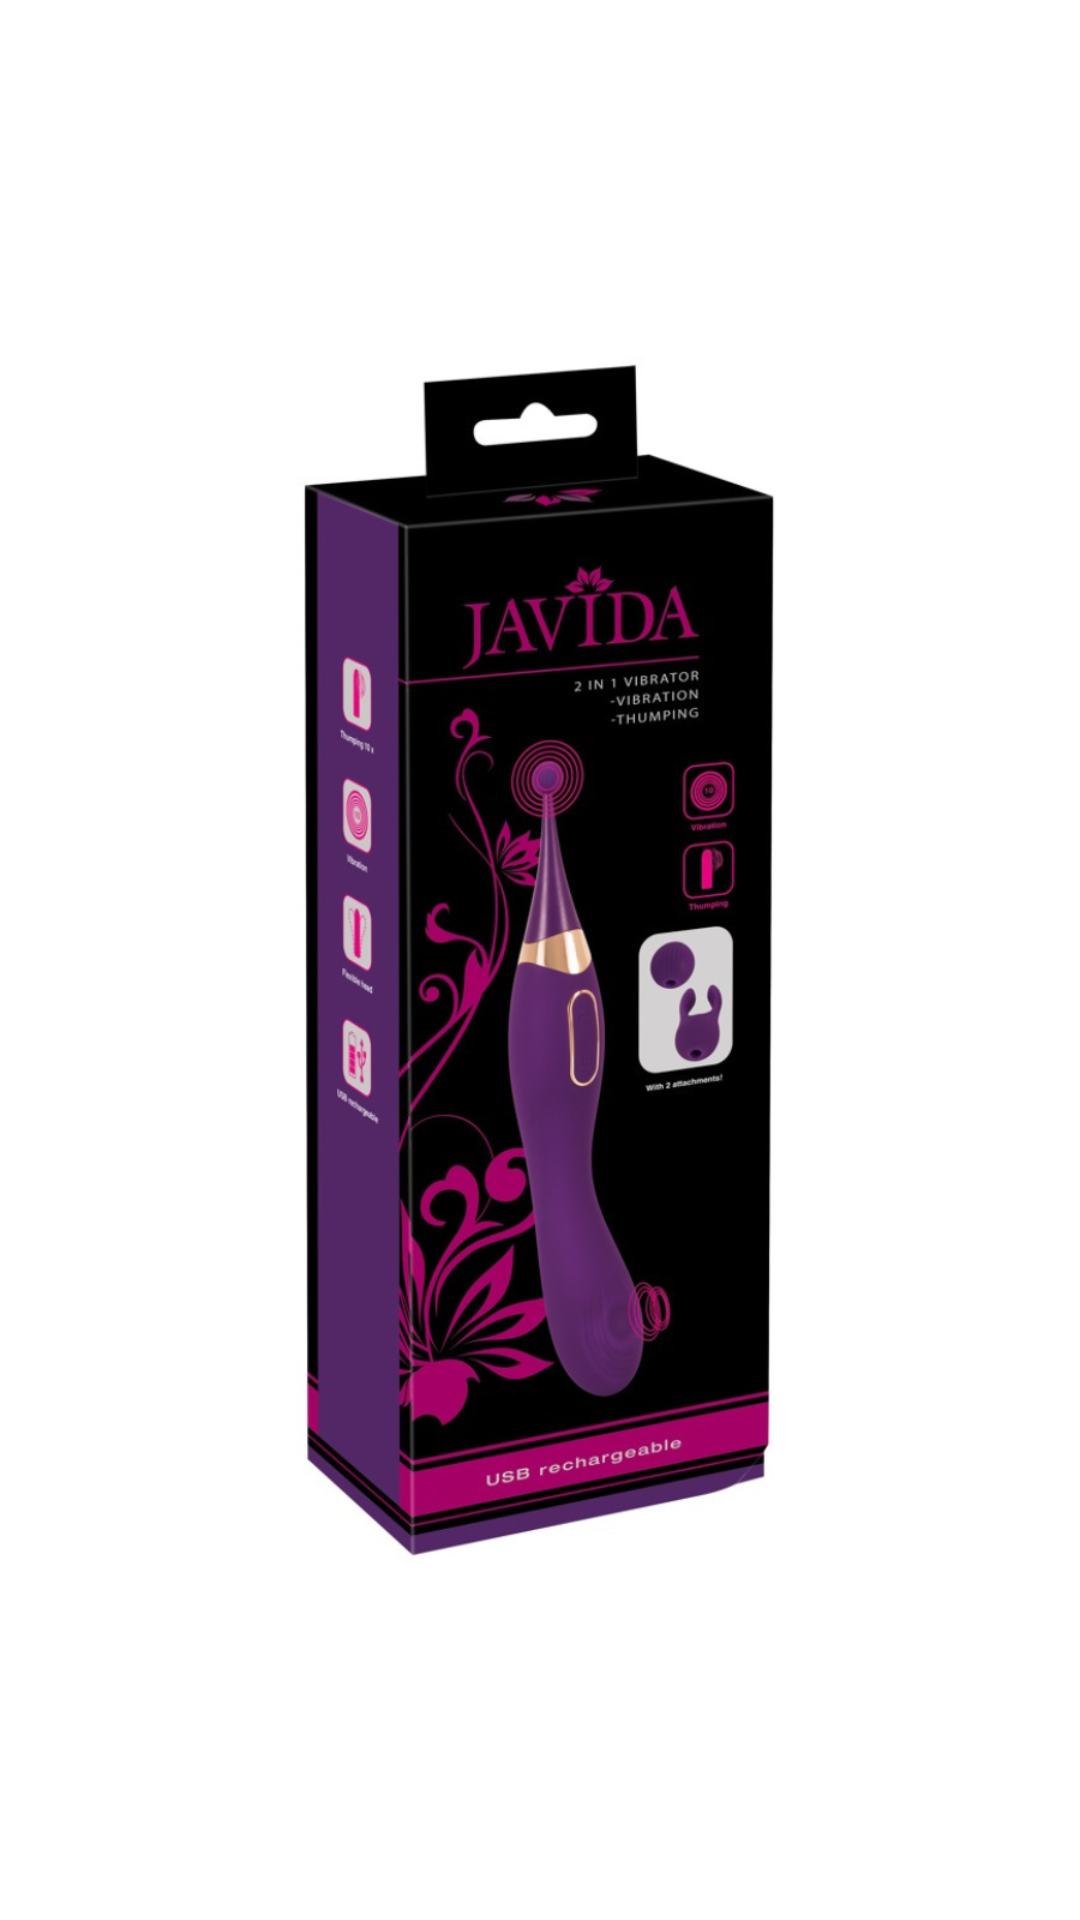 Javida 2-in-1 vibrator Chaleplaisir –